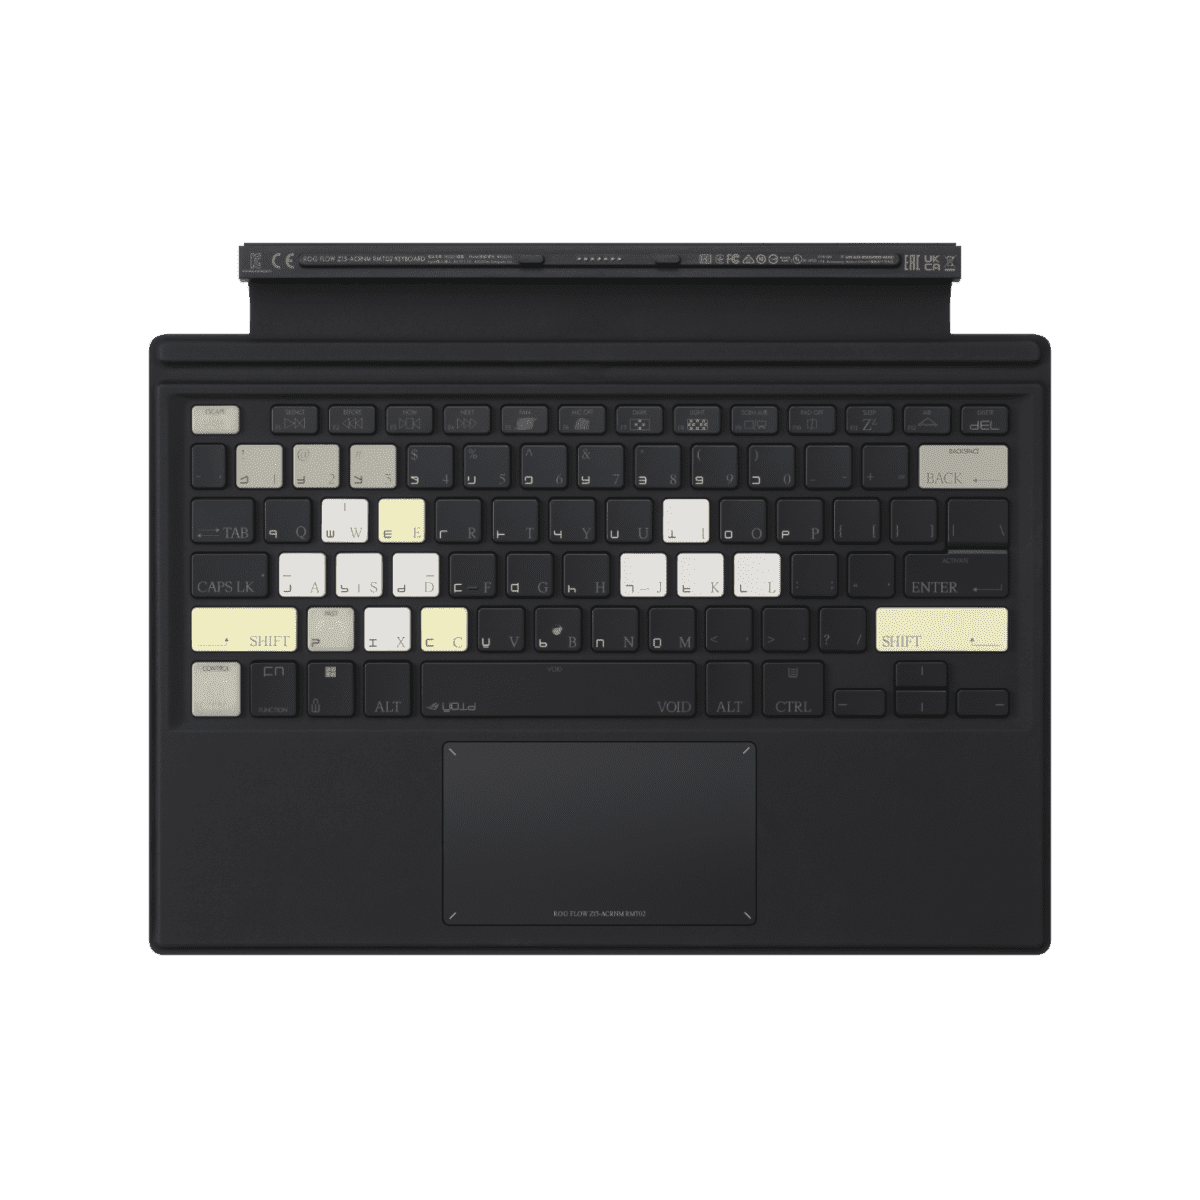 ROG-Flow-Z13-GZ301VIC Dimension of keyboard: 30.2 x 22.8 x 5.75 cm Weight of keyboard: 0.39 Kg